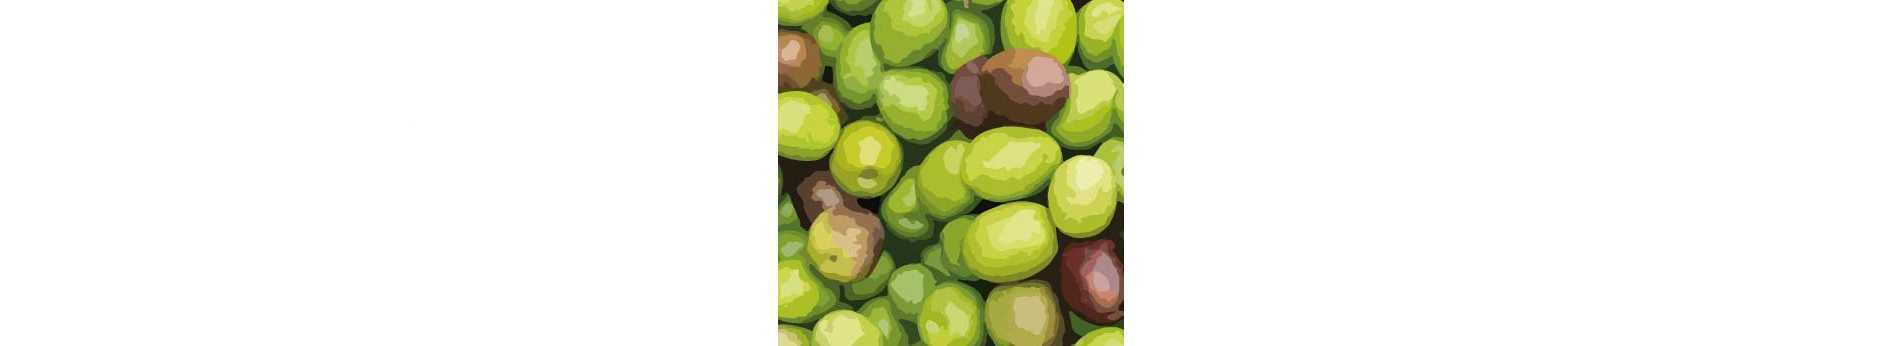 Ramassage et cueillette des olives